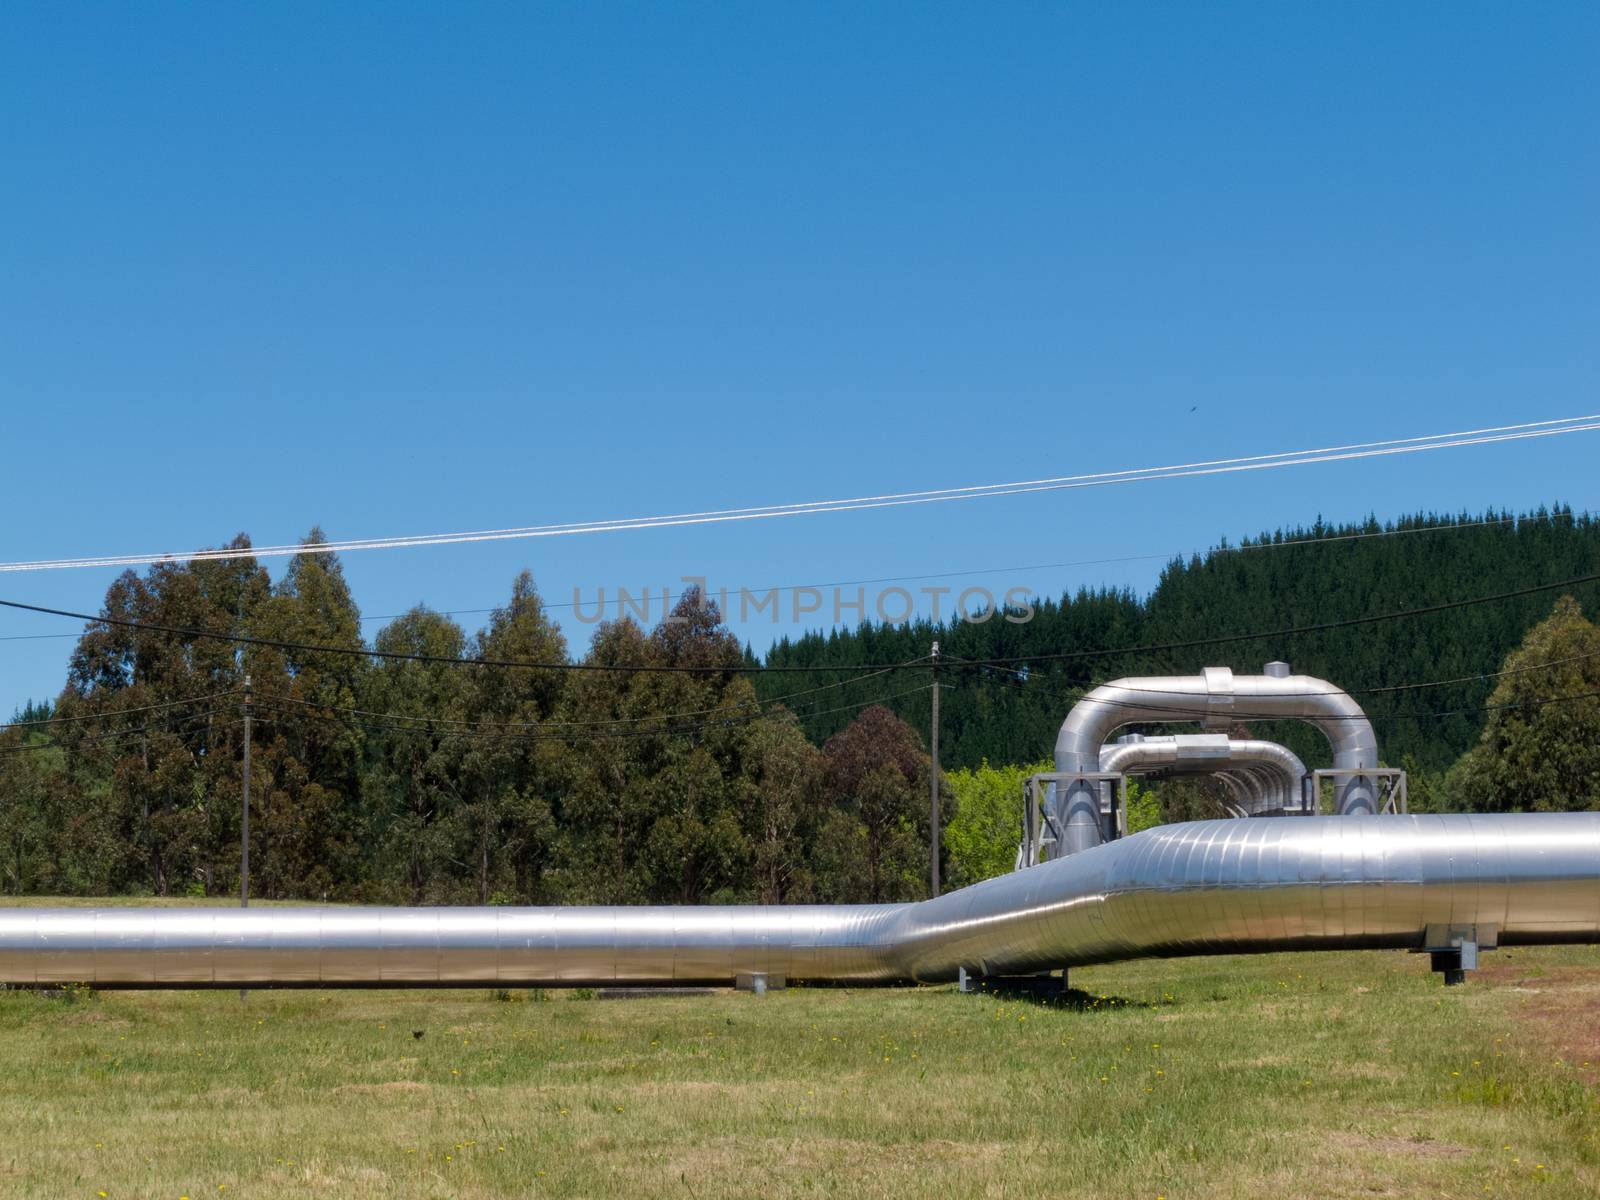 Geothermal power hot water pipeline Wairakei NZ by PiLens